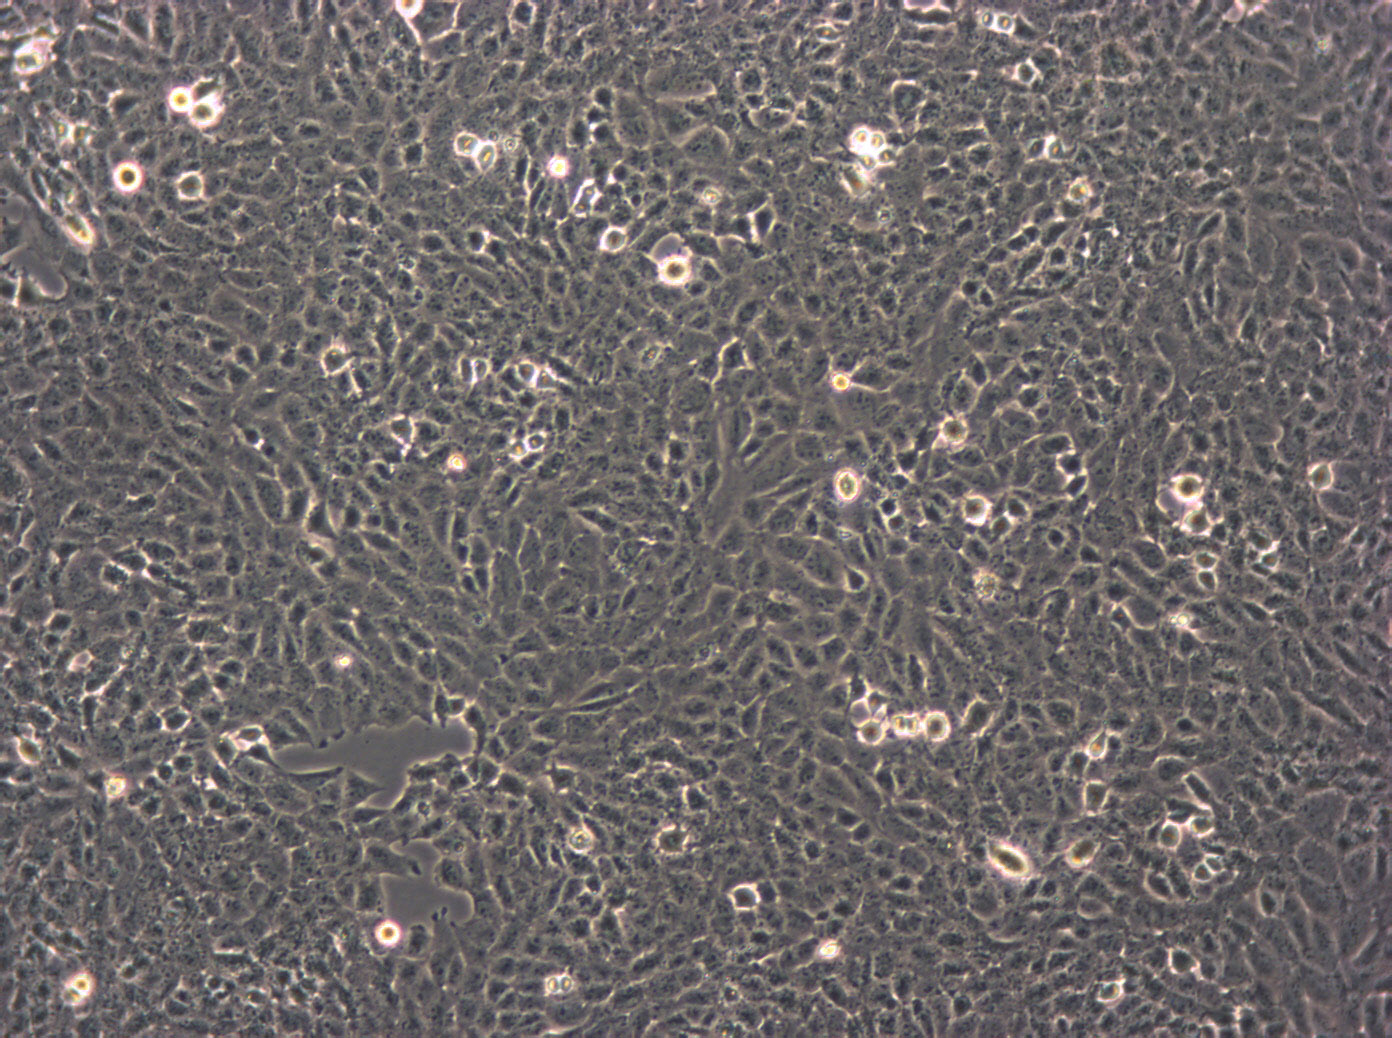 COR-L279 cell line人肺小细胞癌细胞系,COR-L279 cell line